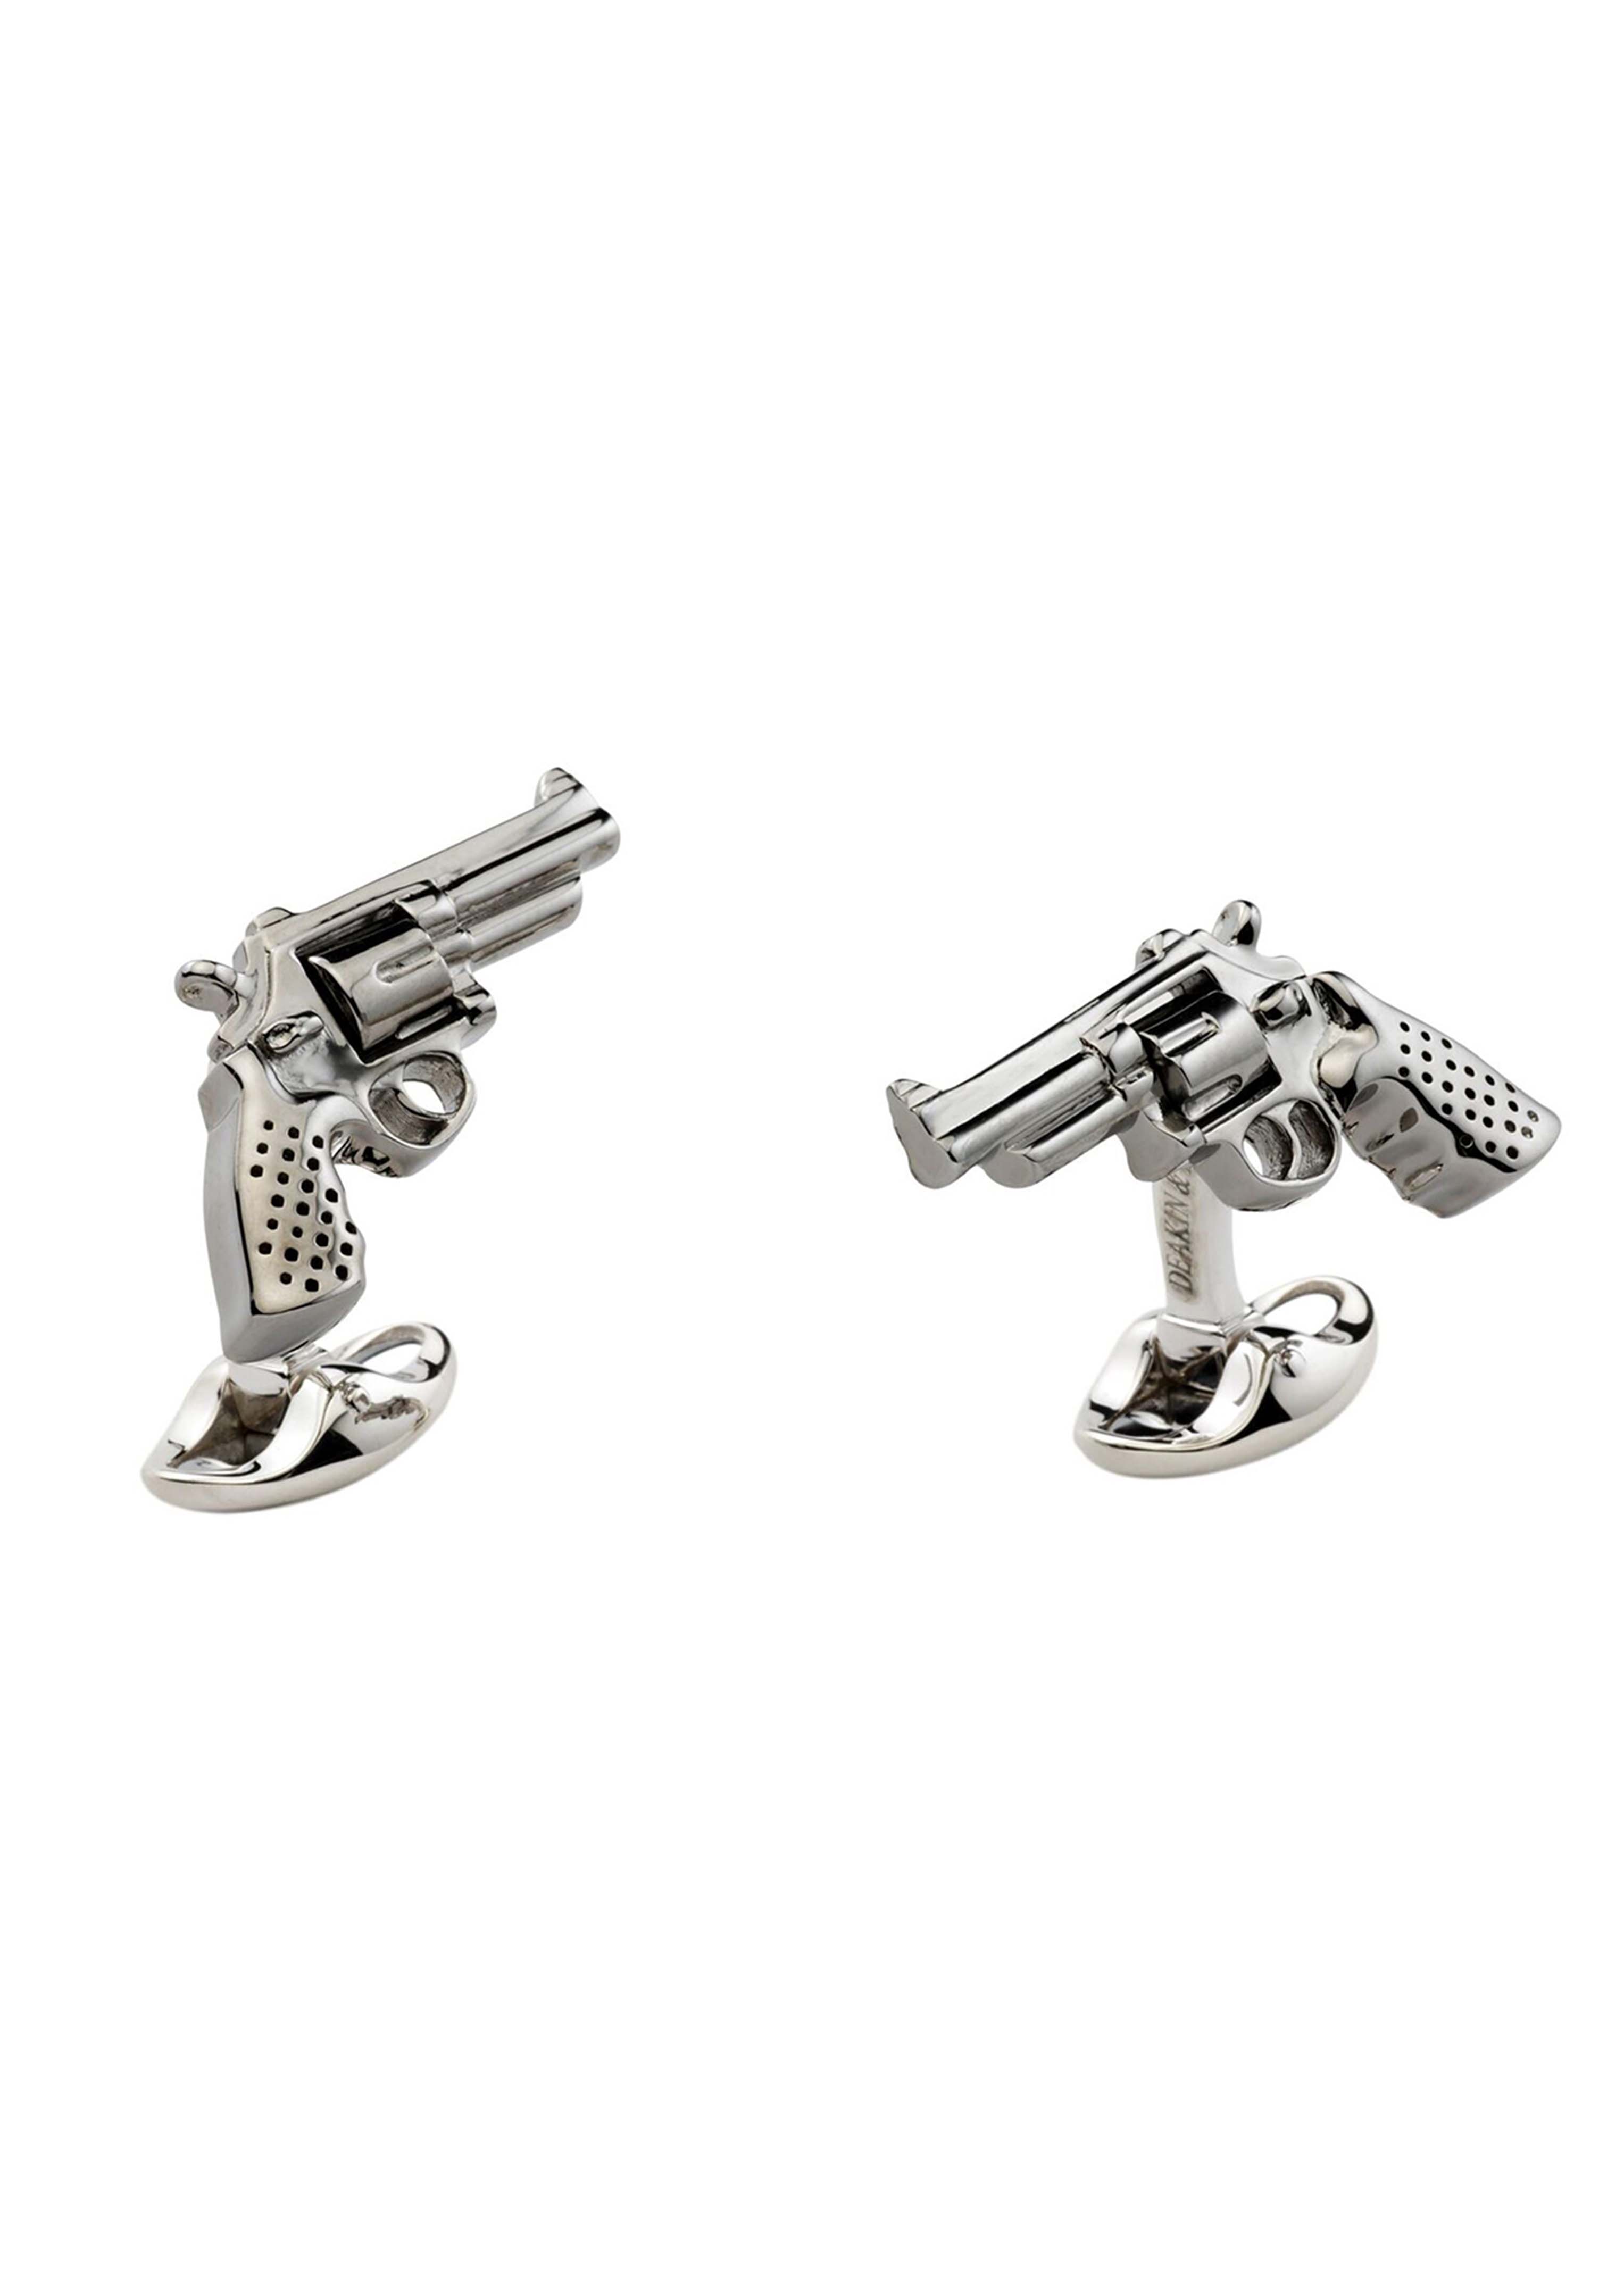 Sterling Silver Revolver Gun Cufflinks Image